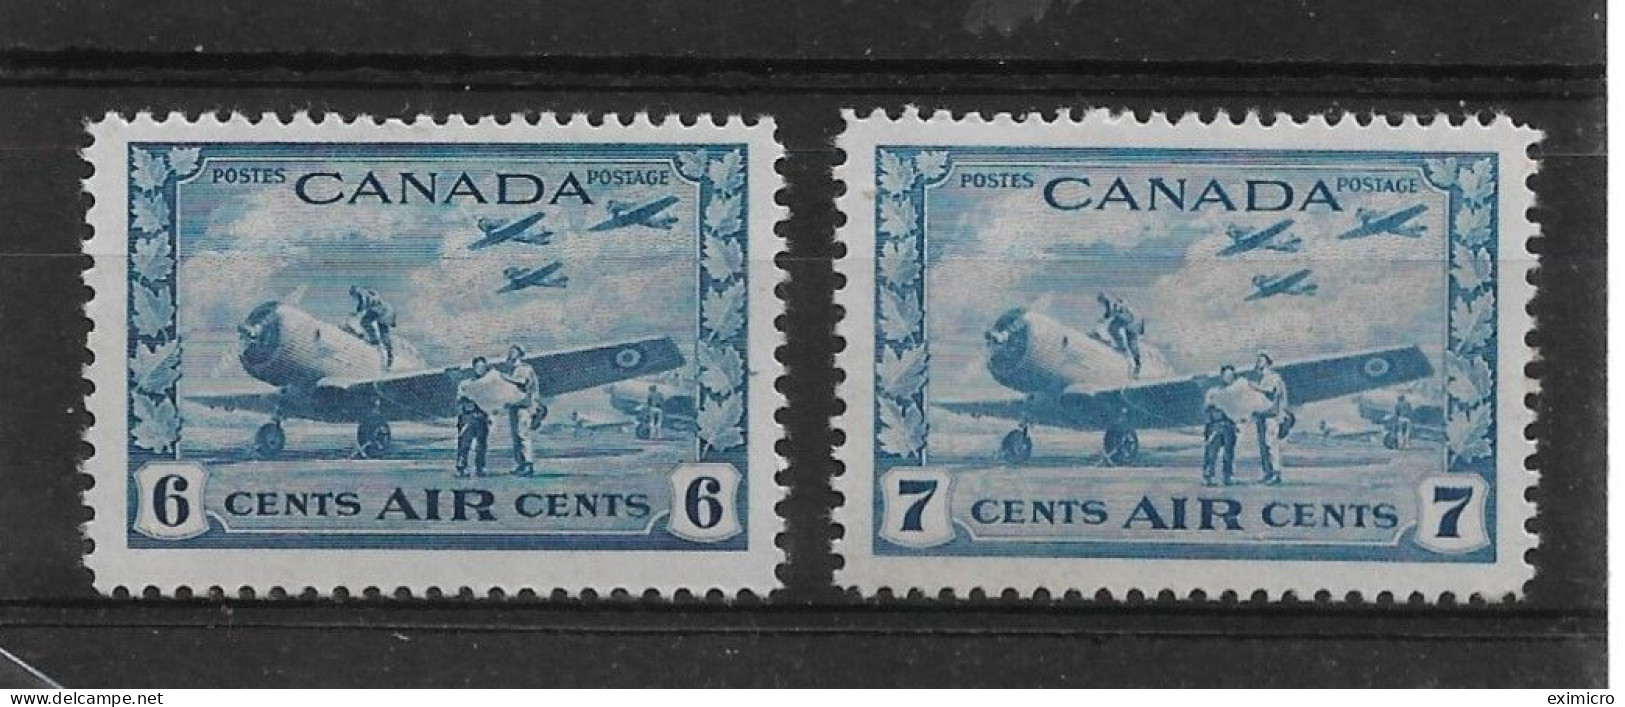 CANADA 1942 - 1943 AIR STAMPS 6c, 7c SG 399/400 UNMOUNTED MINT Cat £37+ - Poste Aérienne